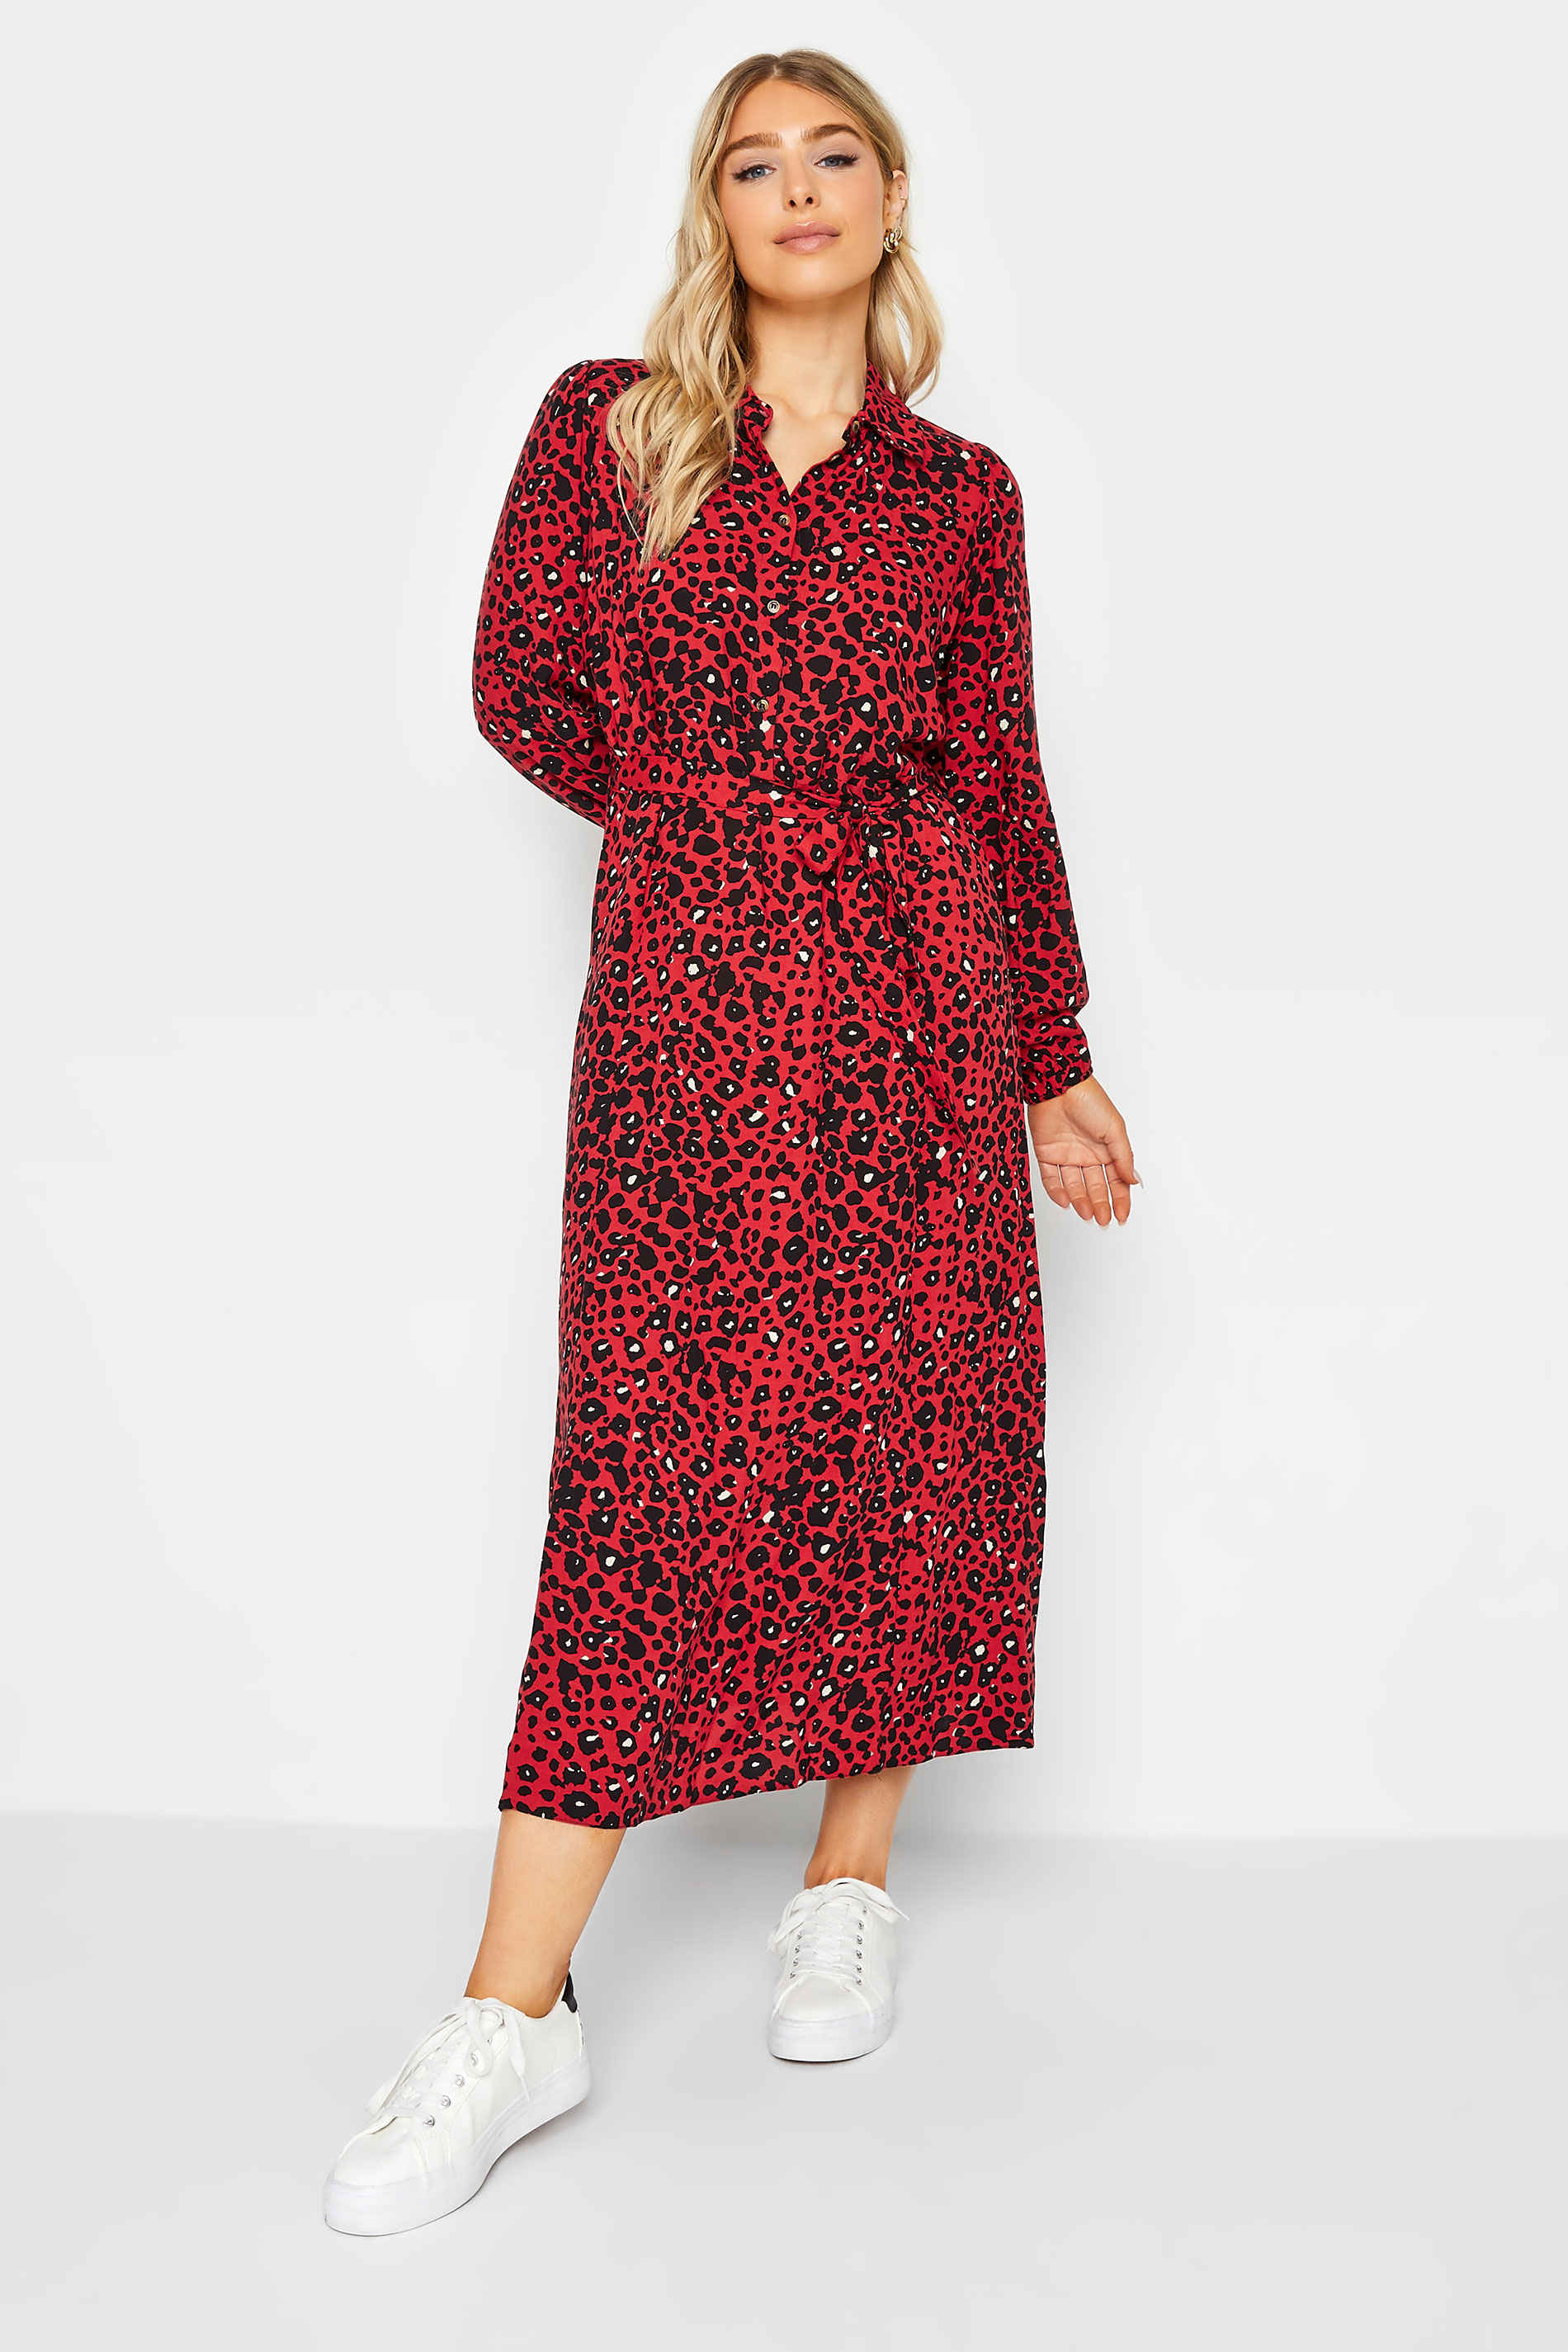 M&Co Red Leopard Print Midaxi Shirt Dress | M&Co 1